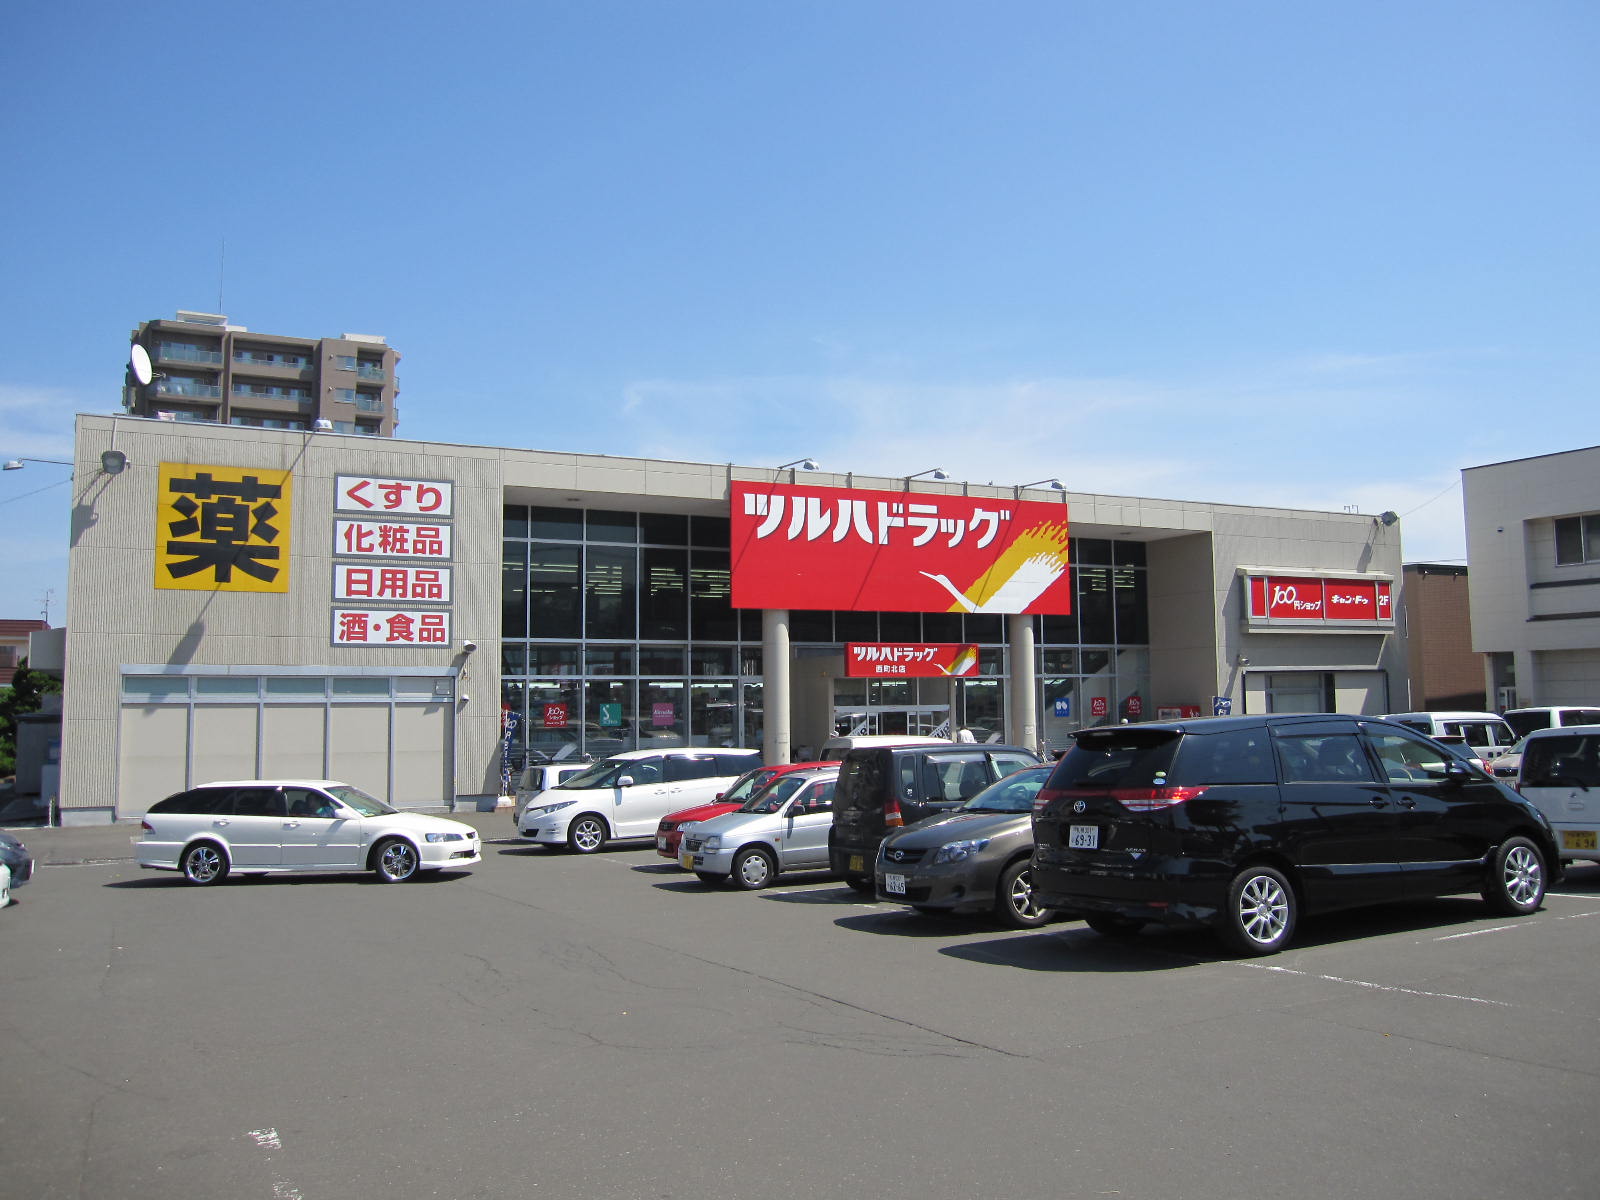 Dorakkusutoa. Tsuruha drag Nishimachikita store (drugstore) to 350m